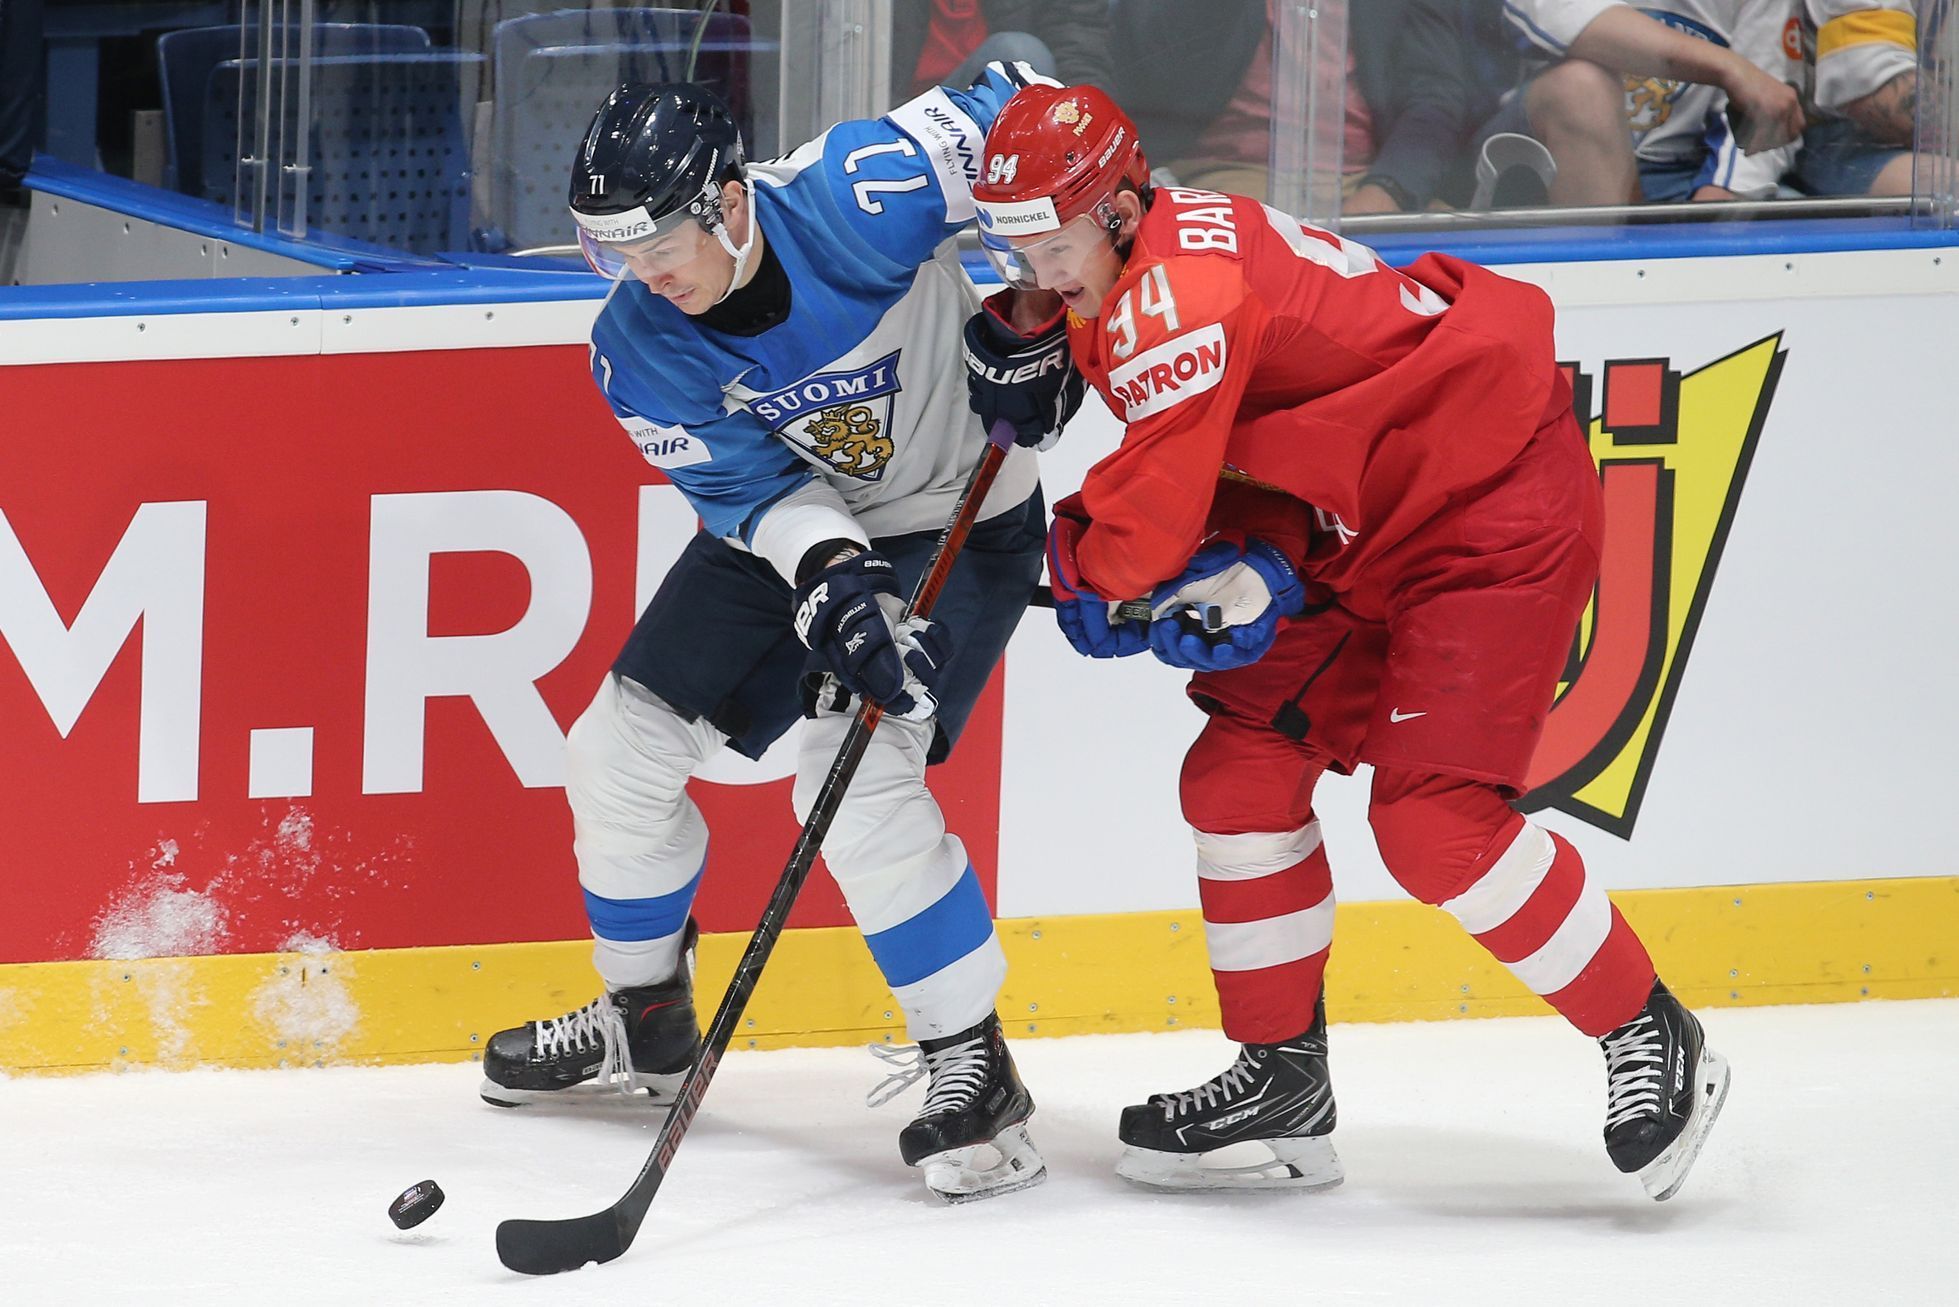 Semifinále MS v hokeji 2019, Rusko - Finsko: Kristian Kuusela a Alexandr Barabanov